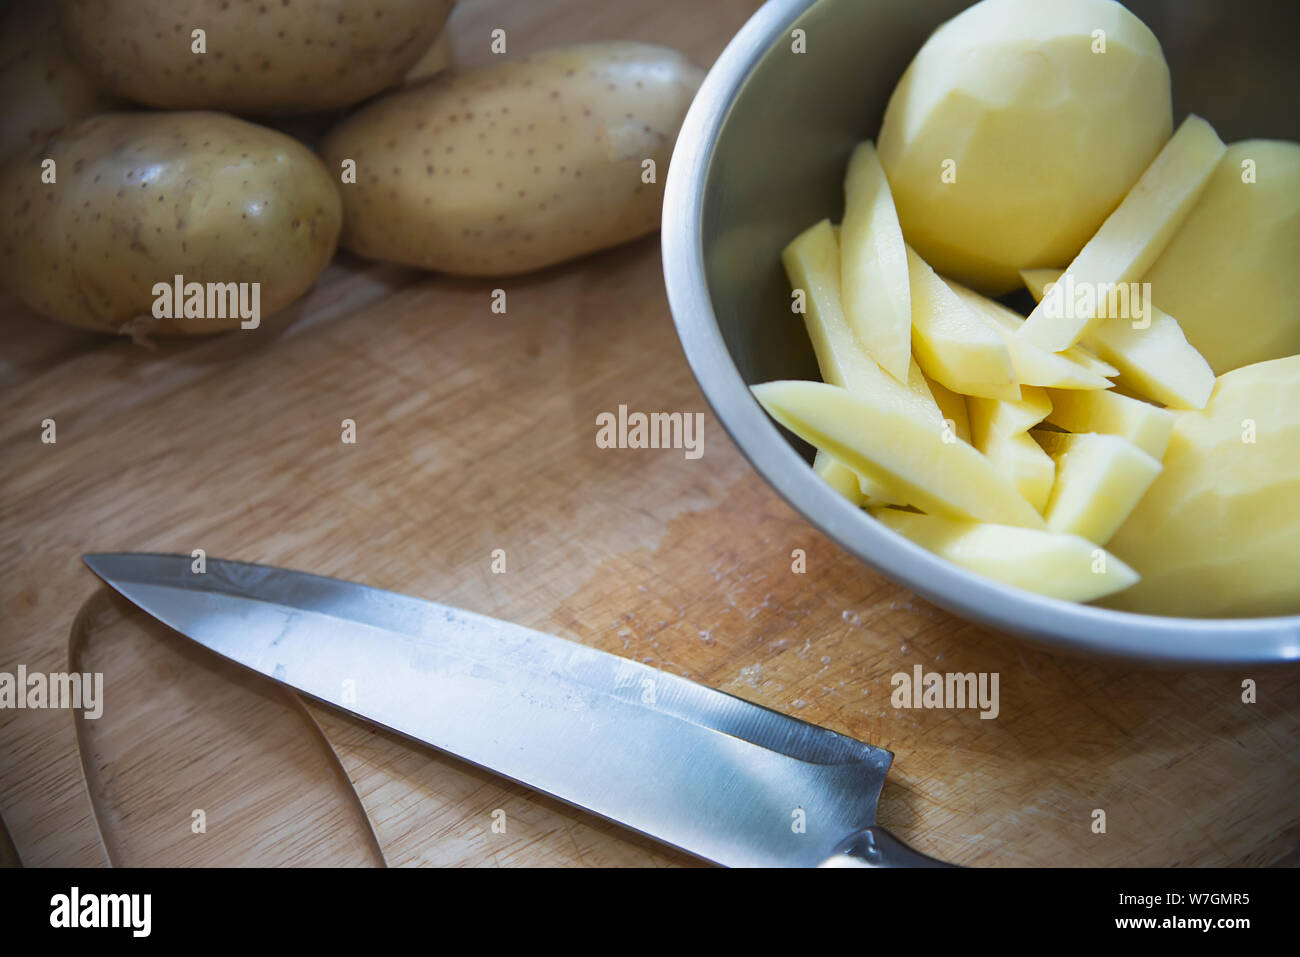 Fresh raw potato stick prepared for cooking in the kitchen - potato cooking concept Stock Photo